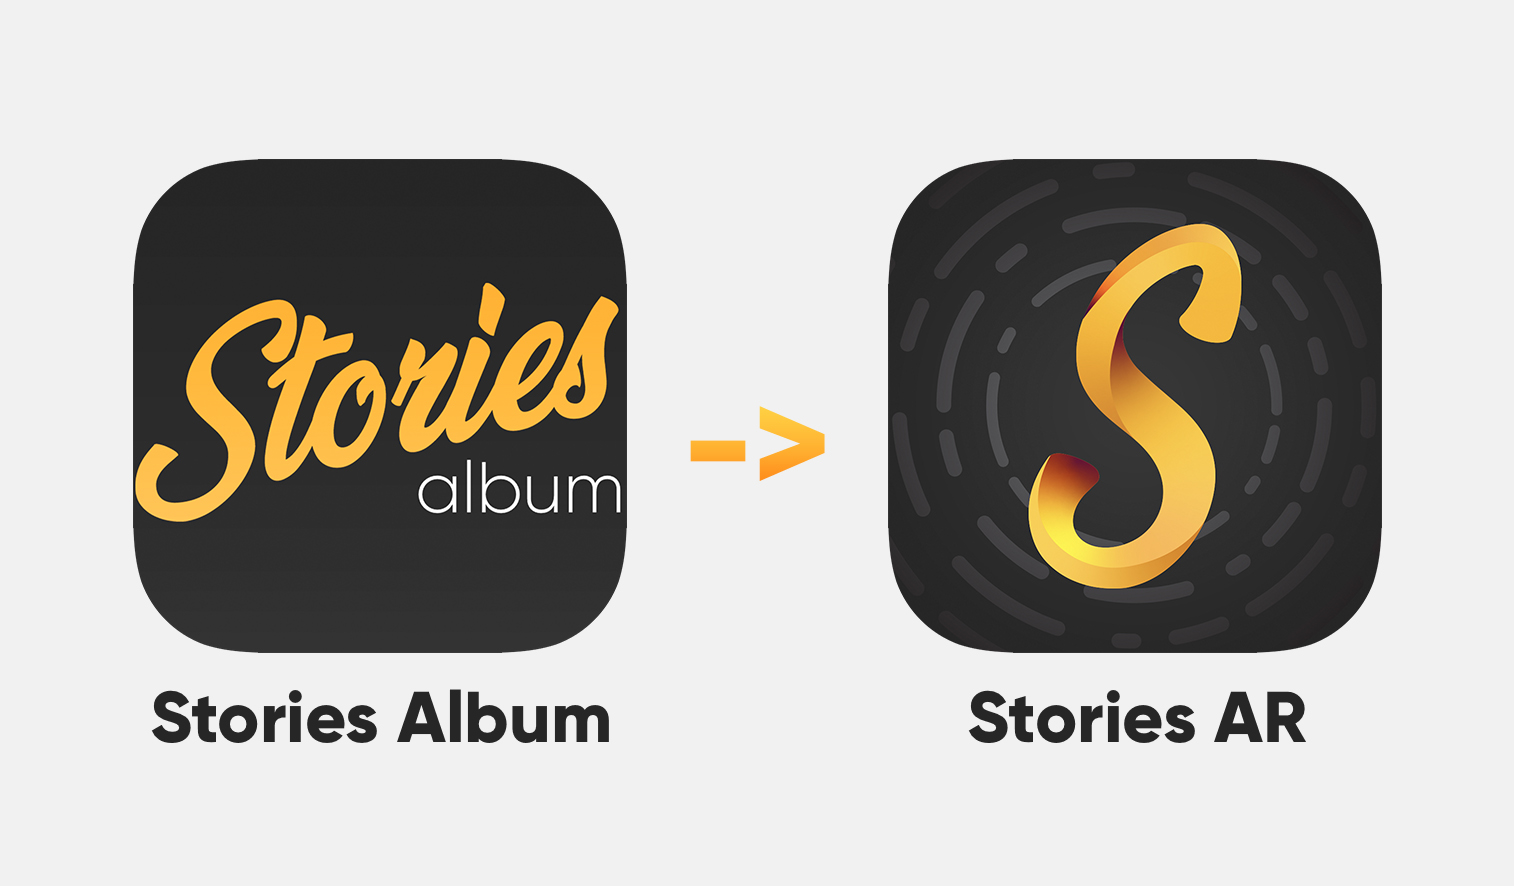 Rebranding augmented reality platform Stories Album to Stories AR